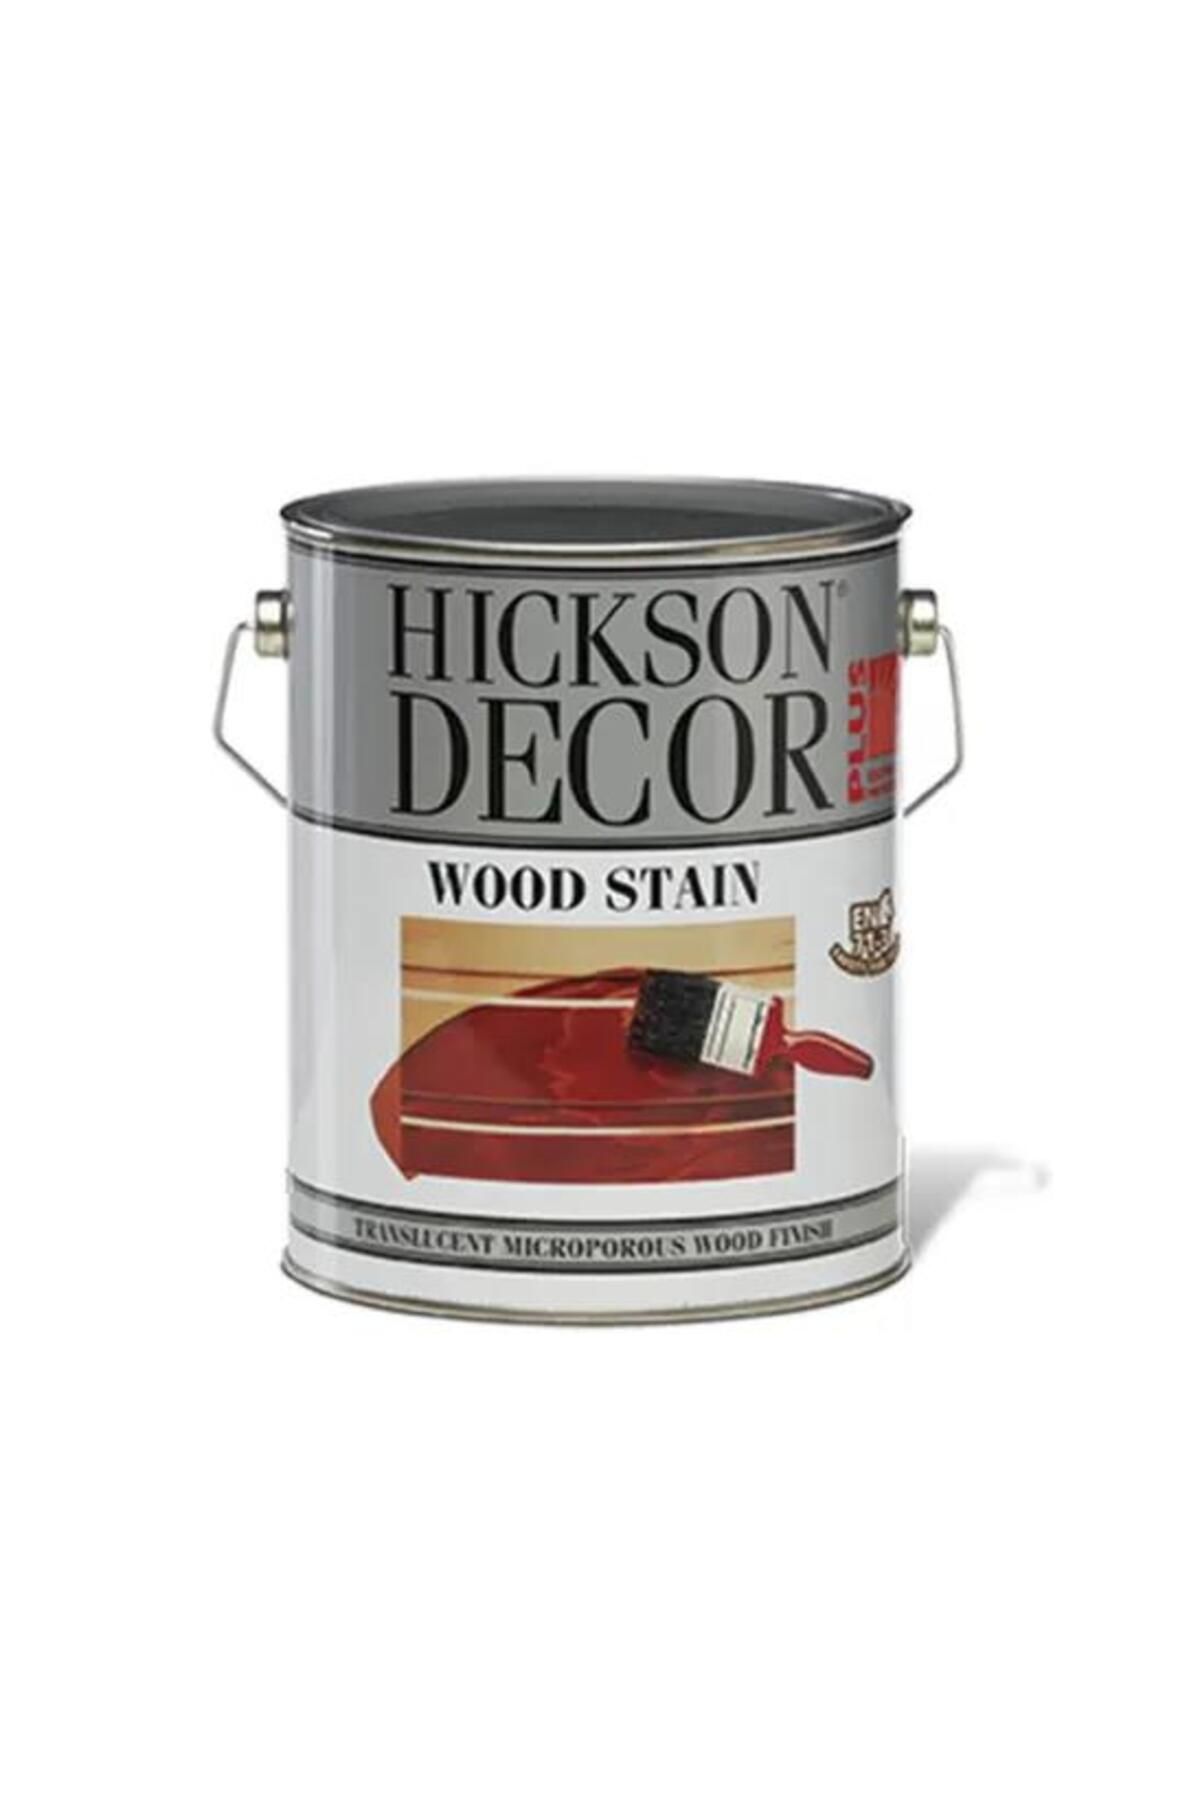 Hickson Decor Ultra Plus Wood Dış Cephe Ahşap Boyası Teak 2.5 Lt